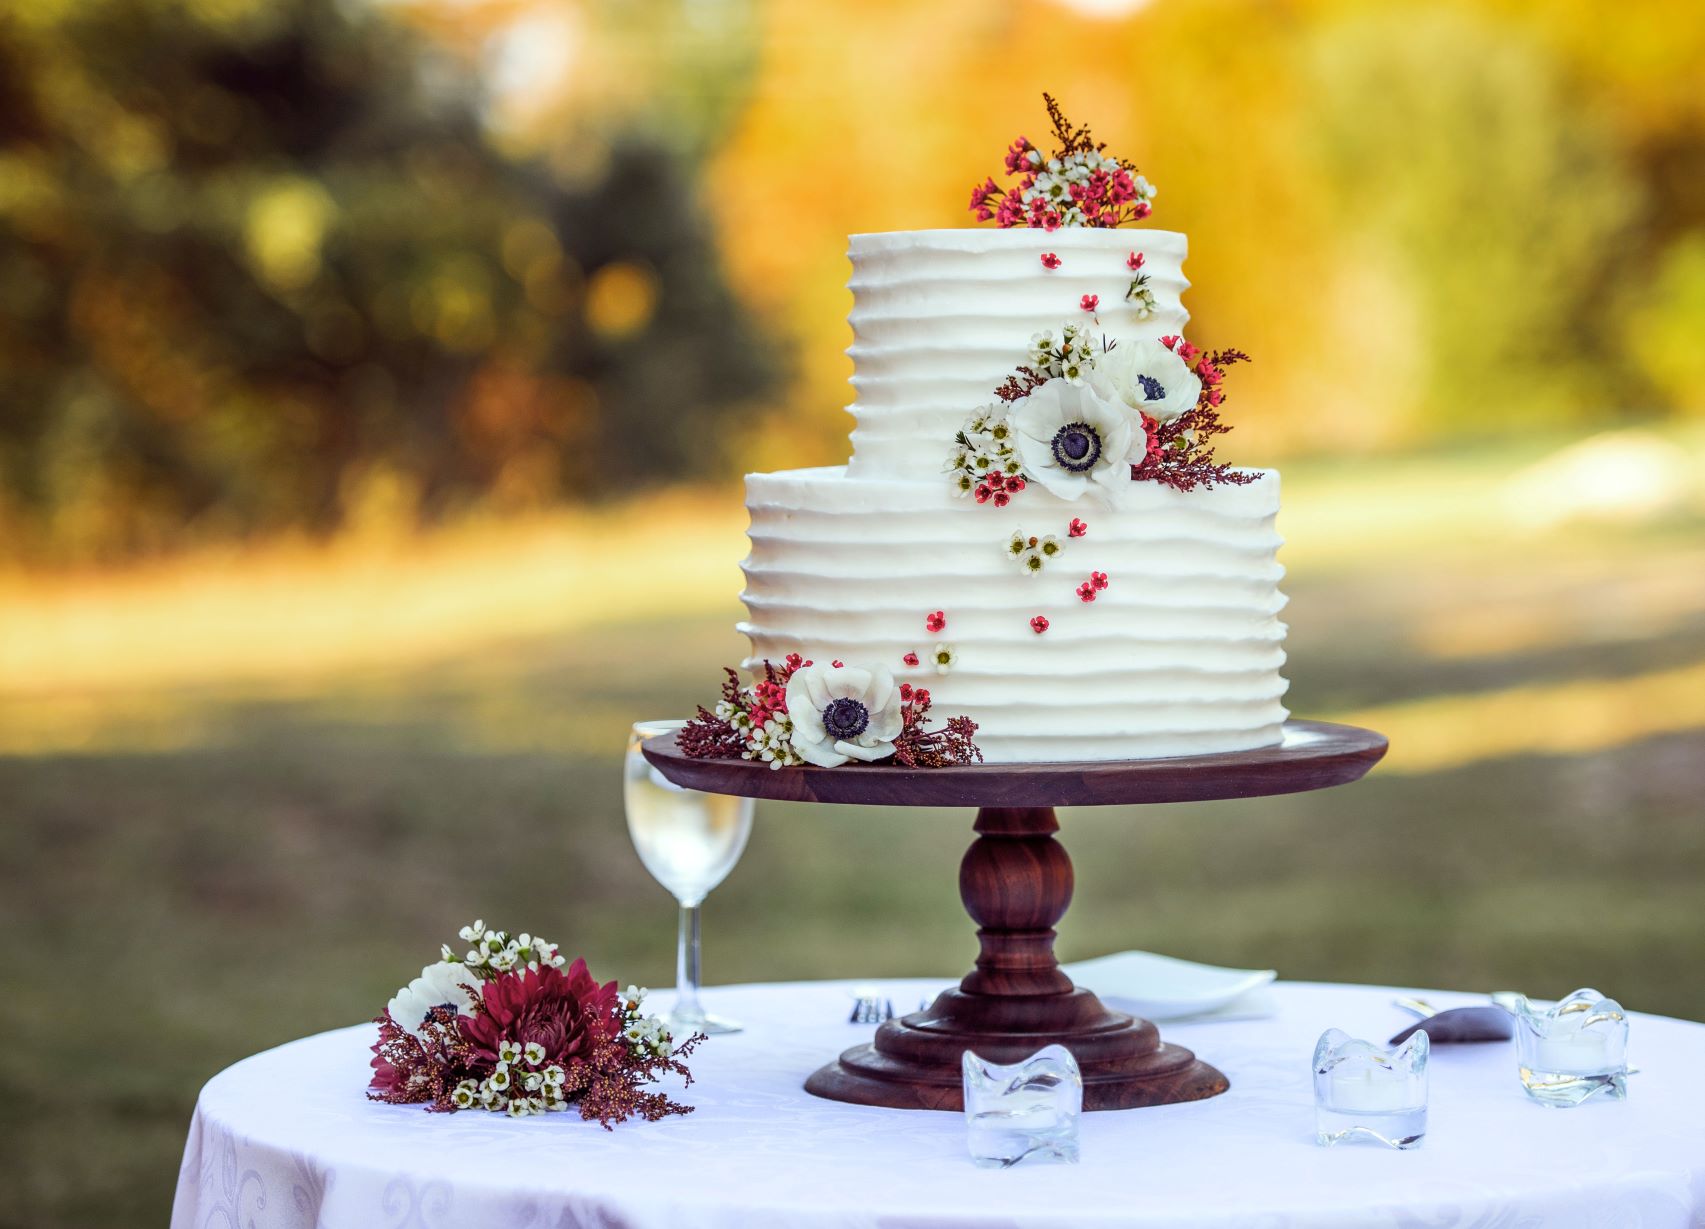 DIY wedding cakes